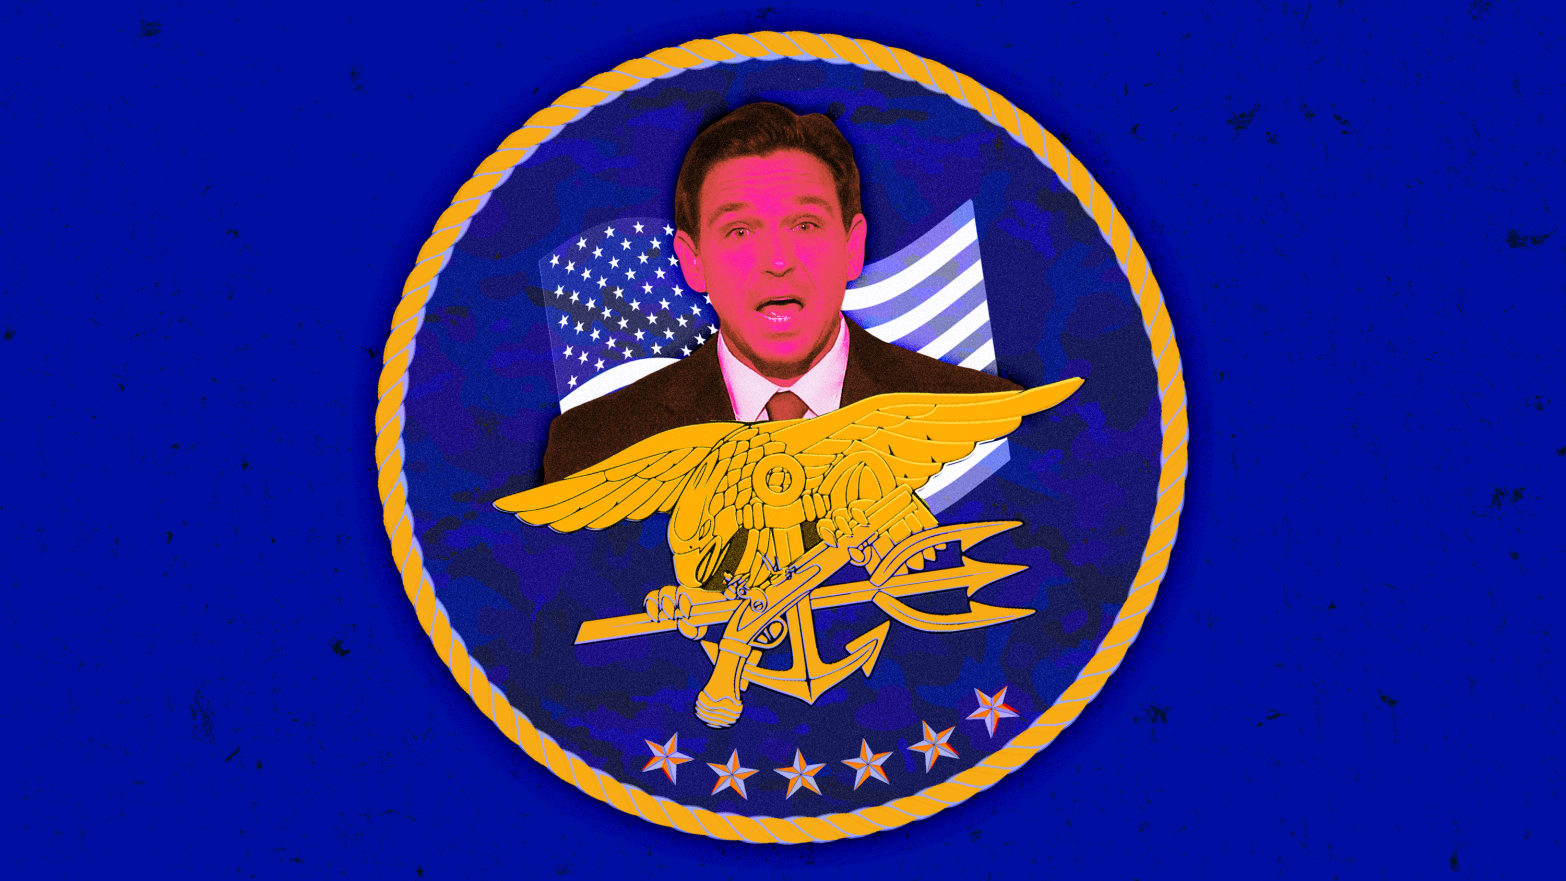 A photo illustration of Florida Gov. Ron DeSantis and the Navy SEAL logo.